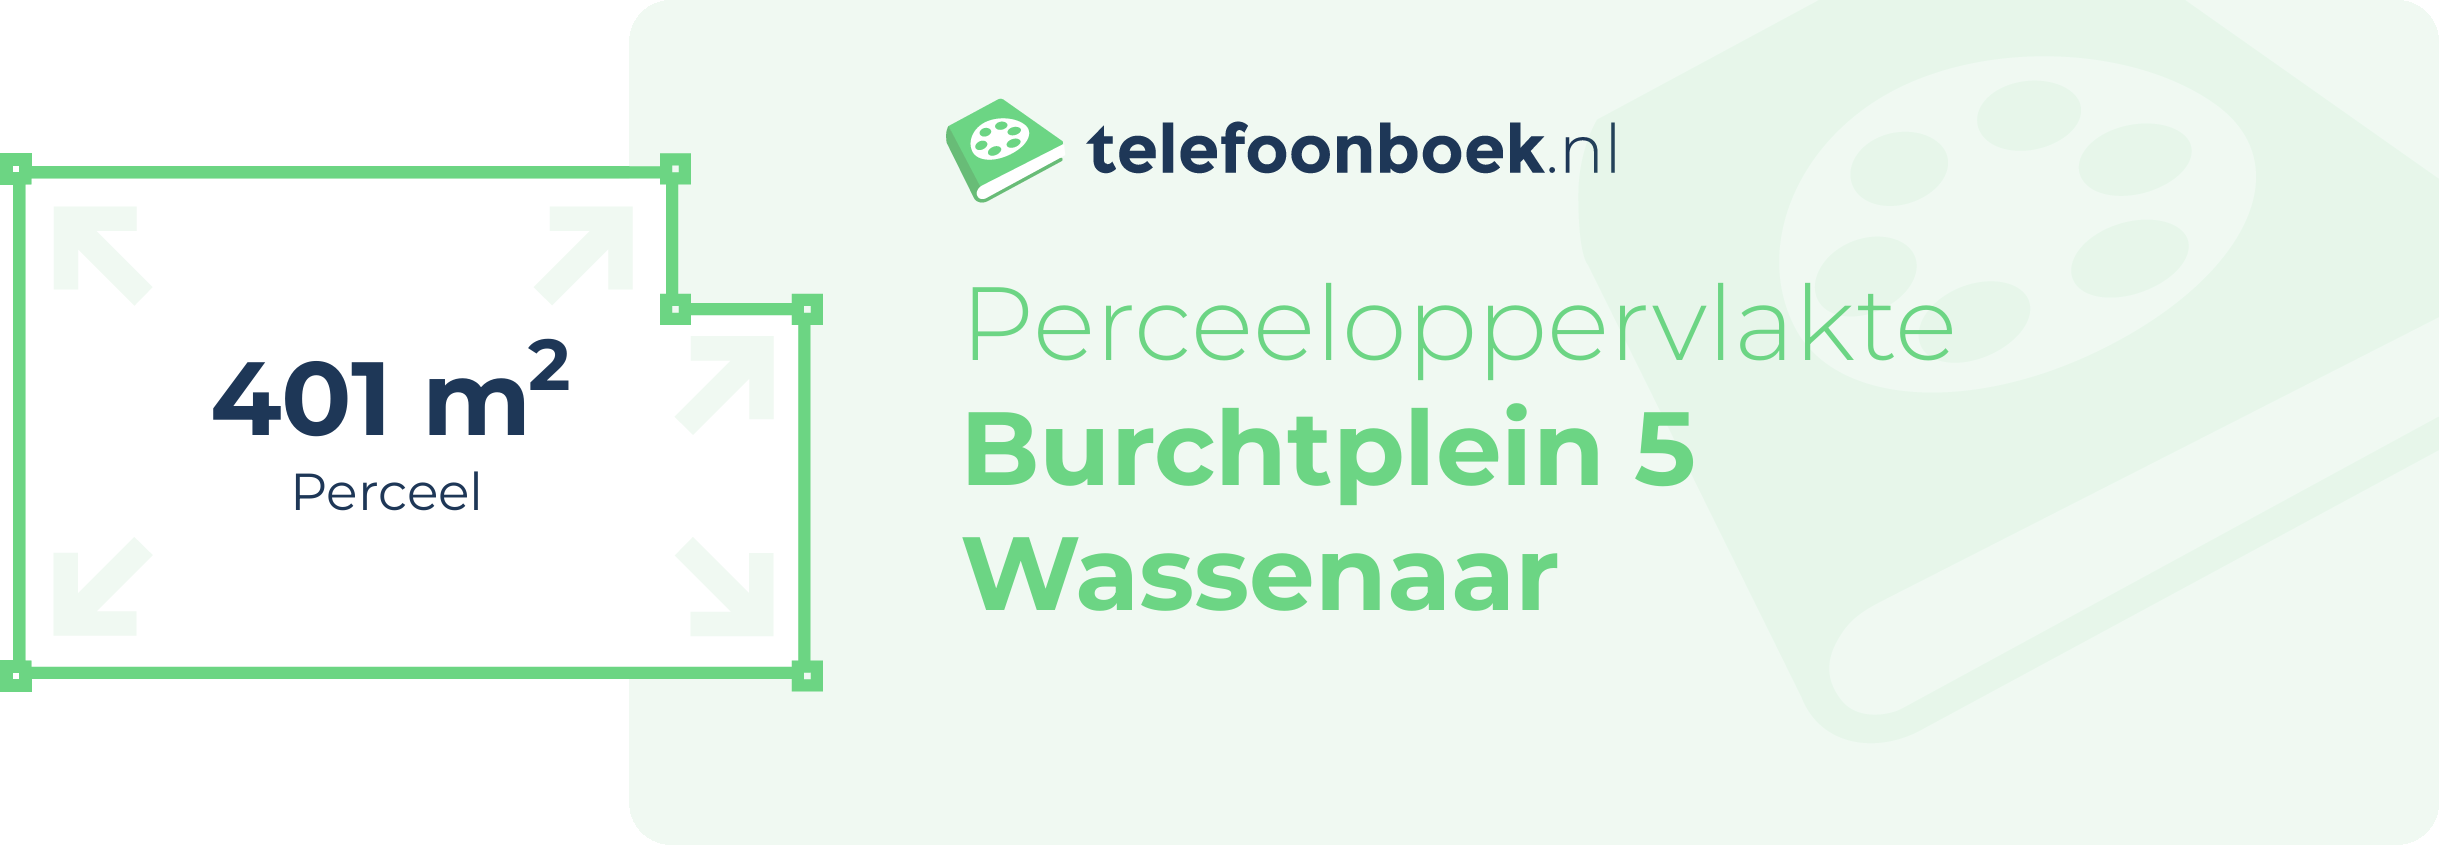 Perceeloppervlakte Burchtplein 5 Wassenaar